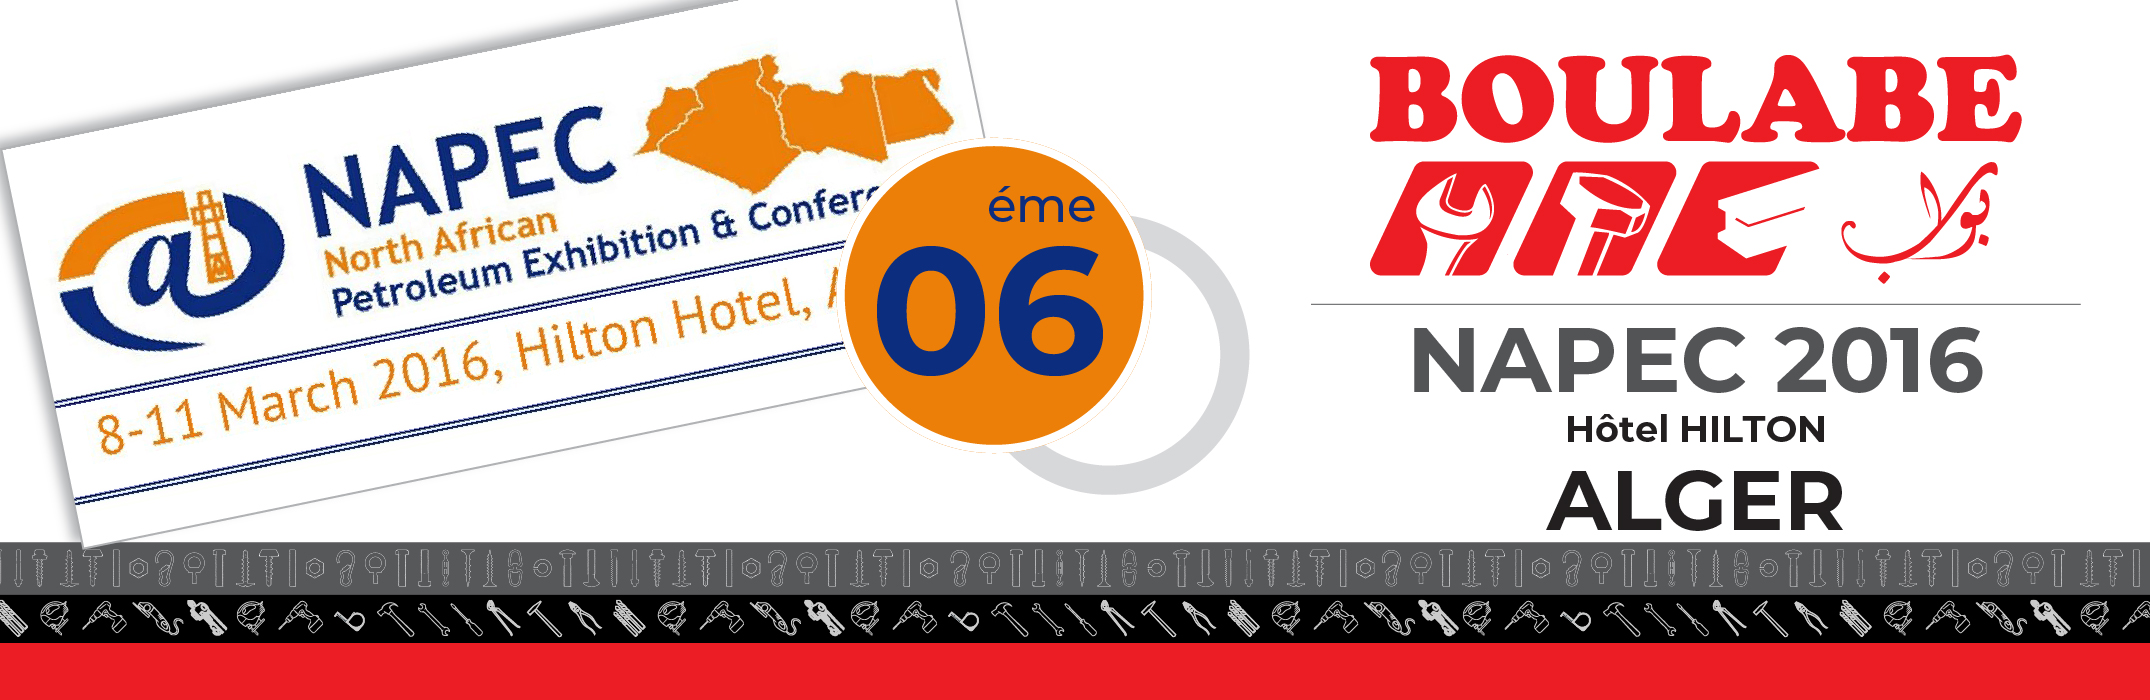 North African Petroleum Exhibition & Conferences « NAPEC 2016 »